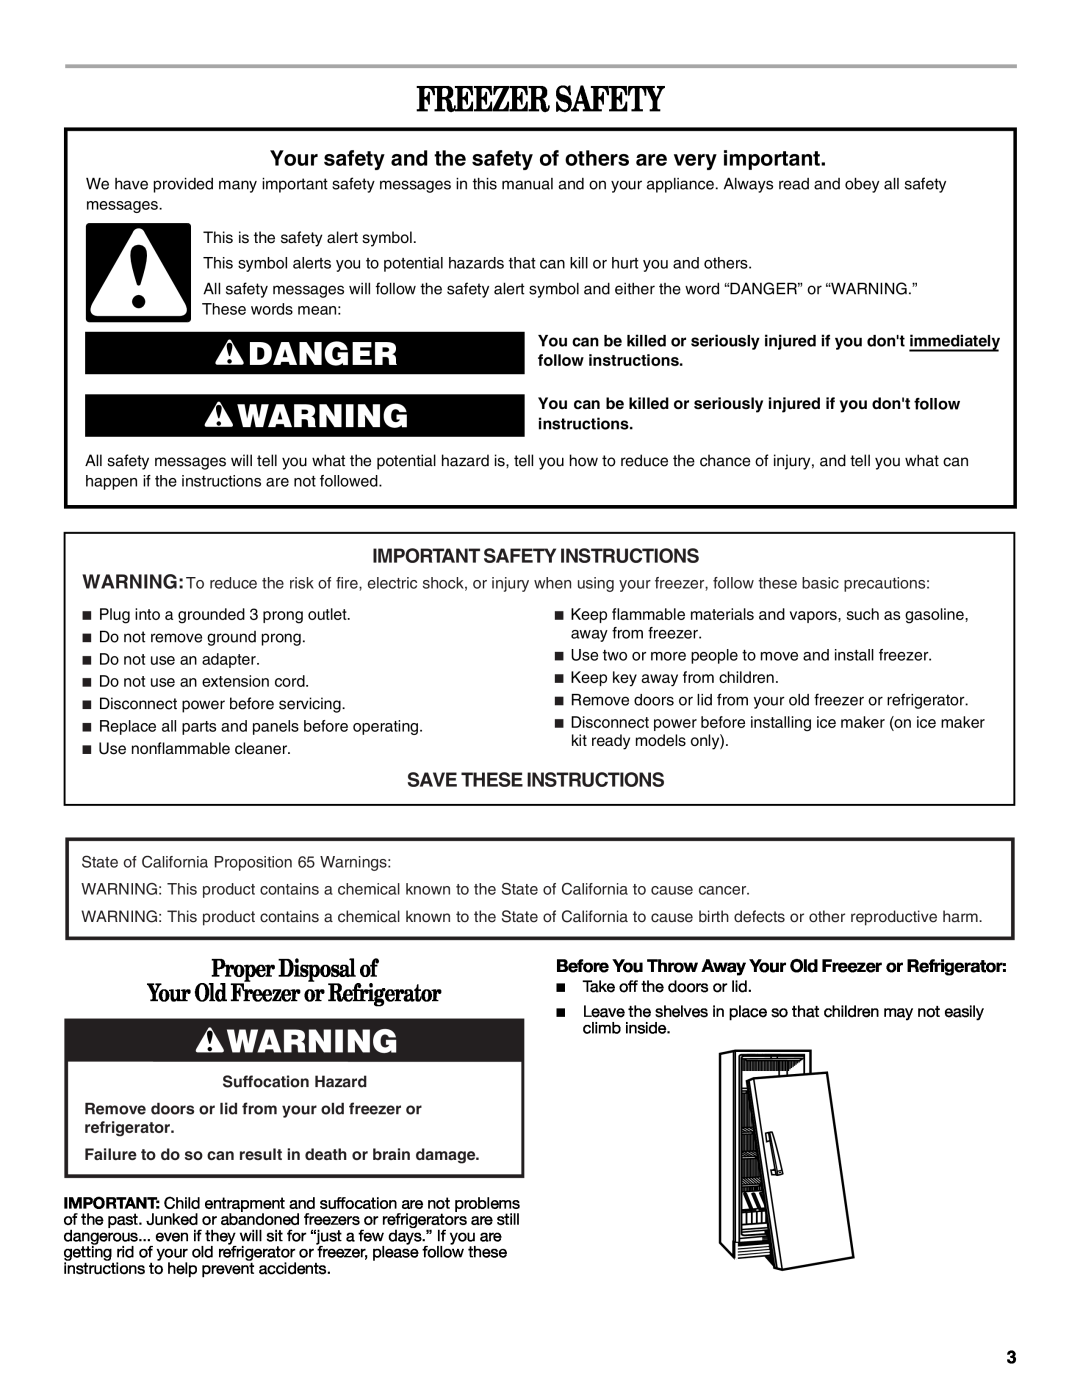 Danby DUFM454WDB Freezer Safety, Danger, Proper Disposal of Your Old Freezer or Refrigerator, Save These Instructions 